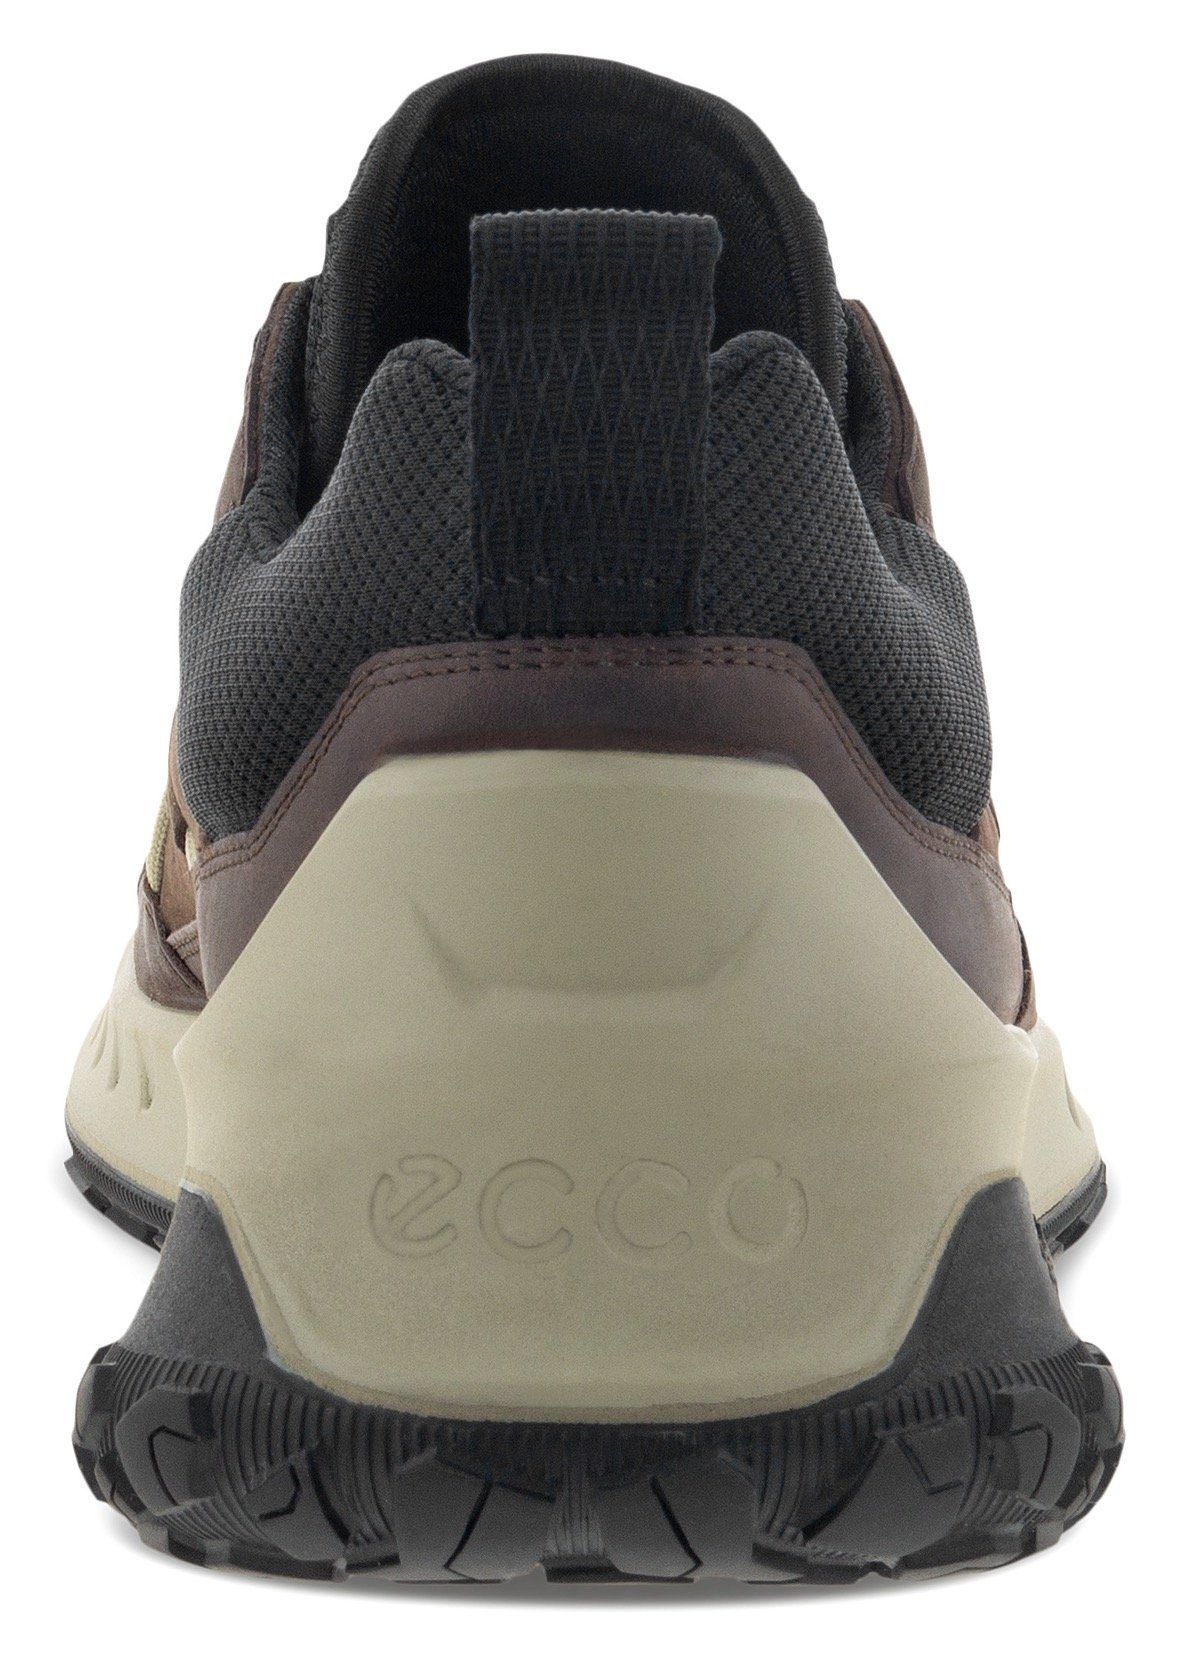 Sneaker Ecco profilierter mit dunkelbraun Michelin-Laufsohle M ULT-TRN